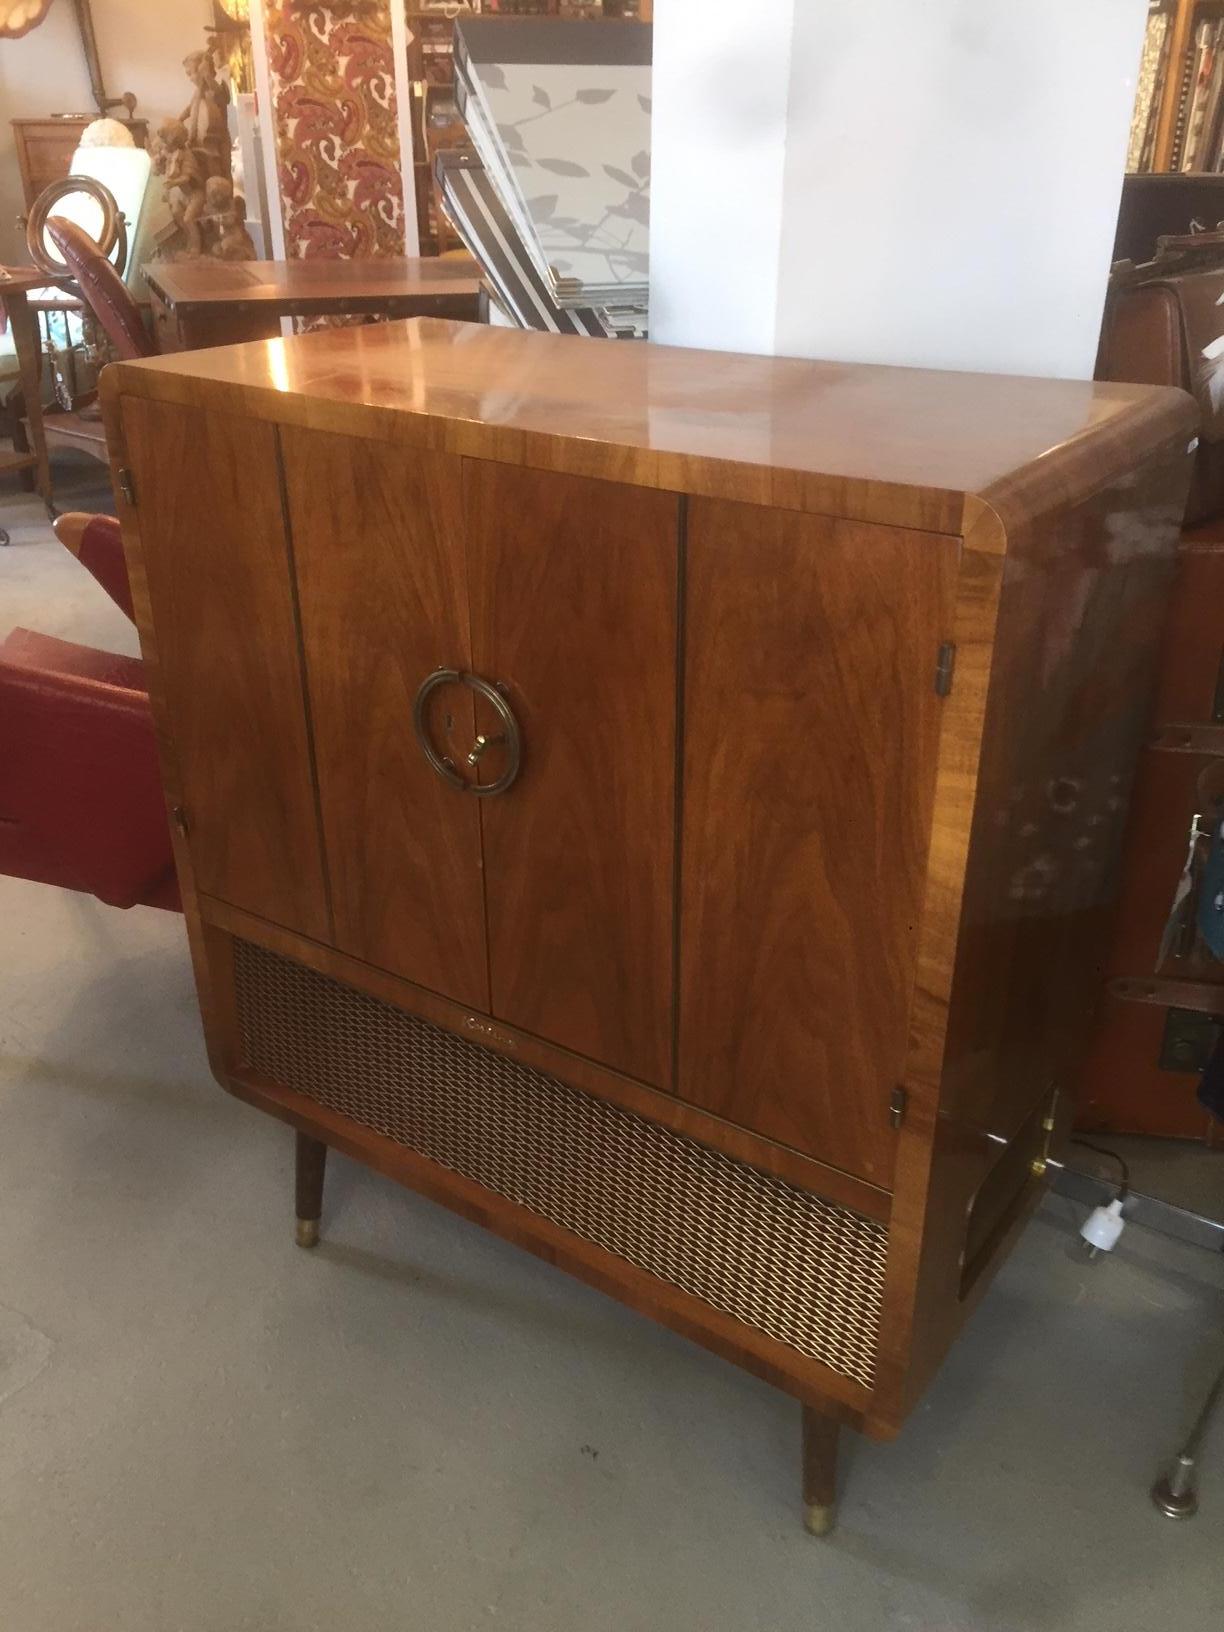 1950s radio cabinet